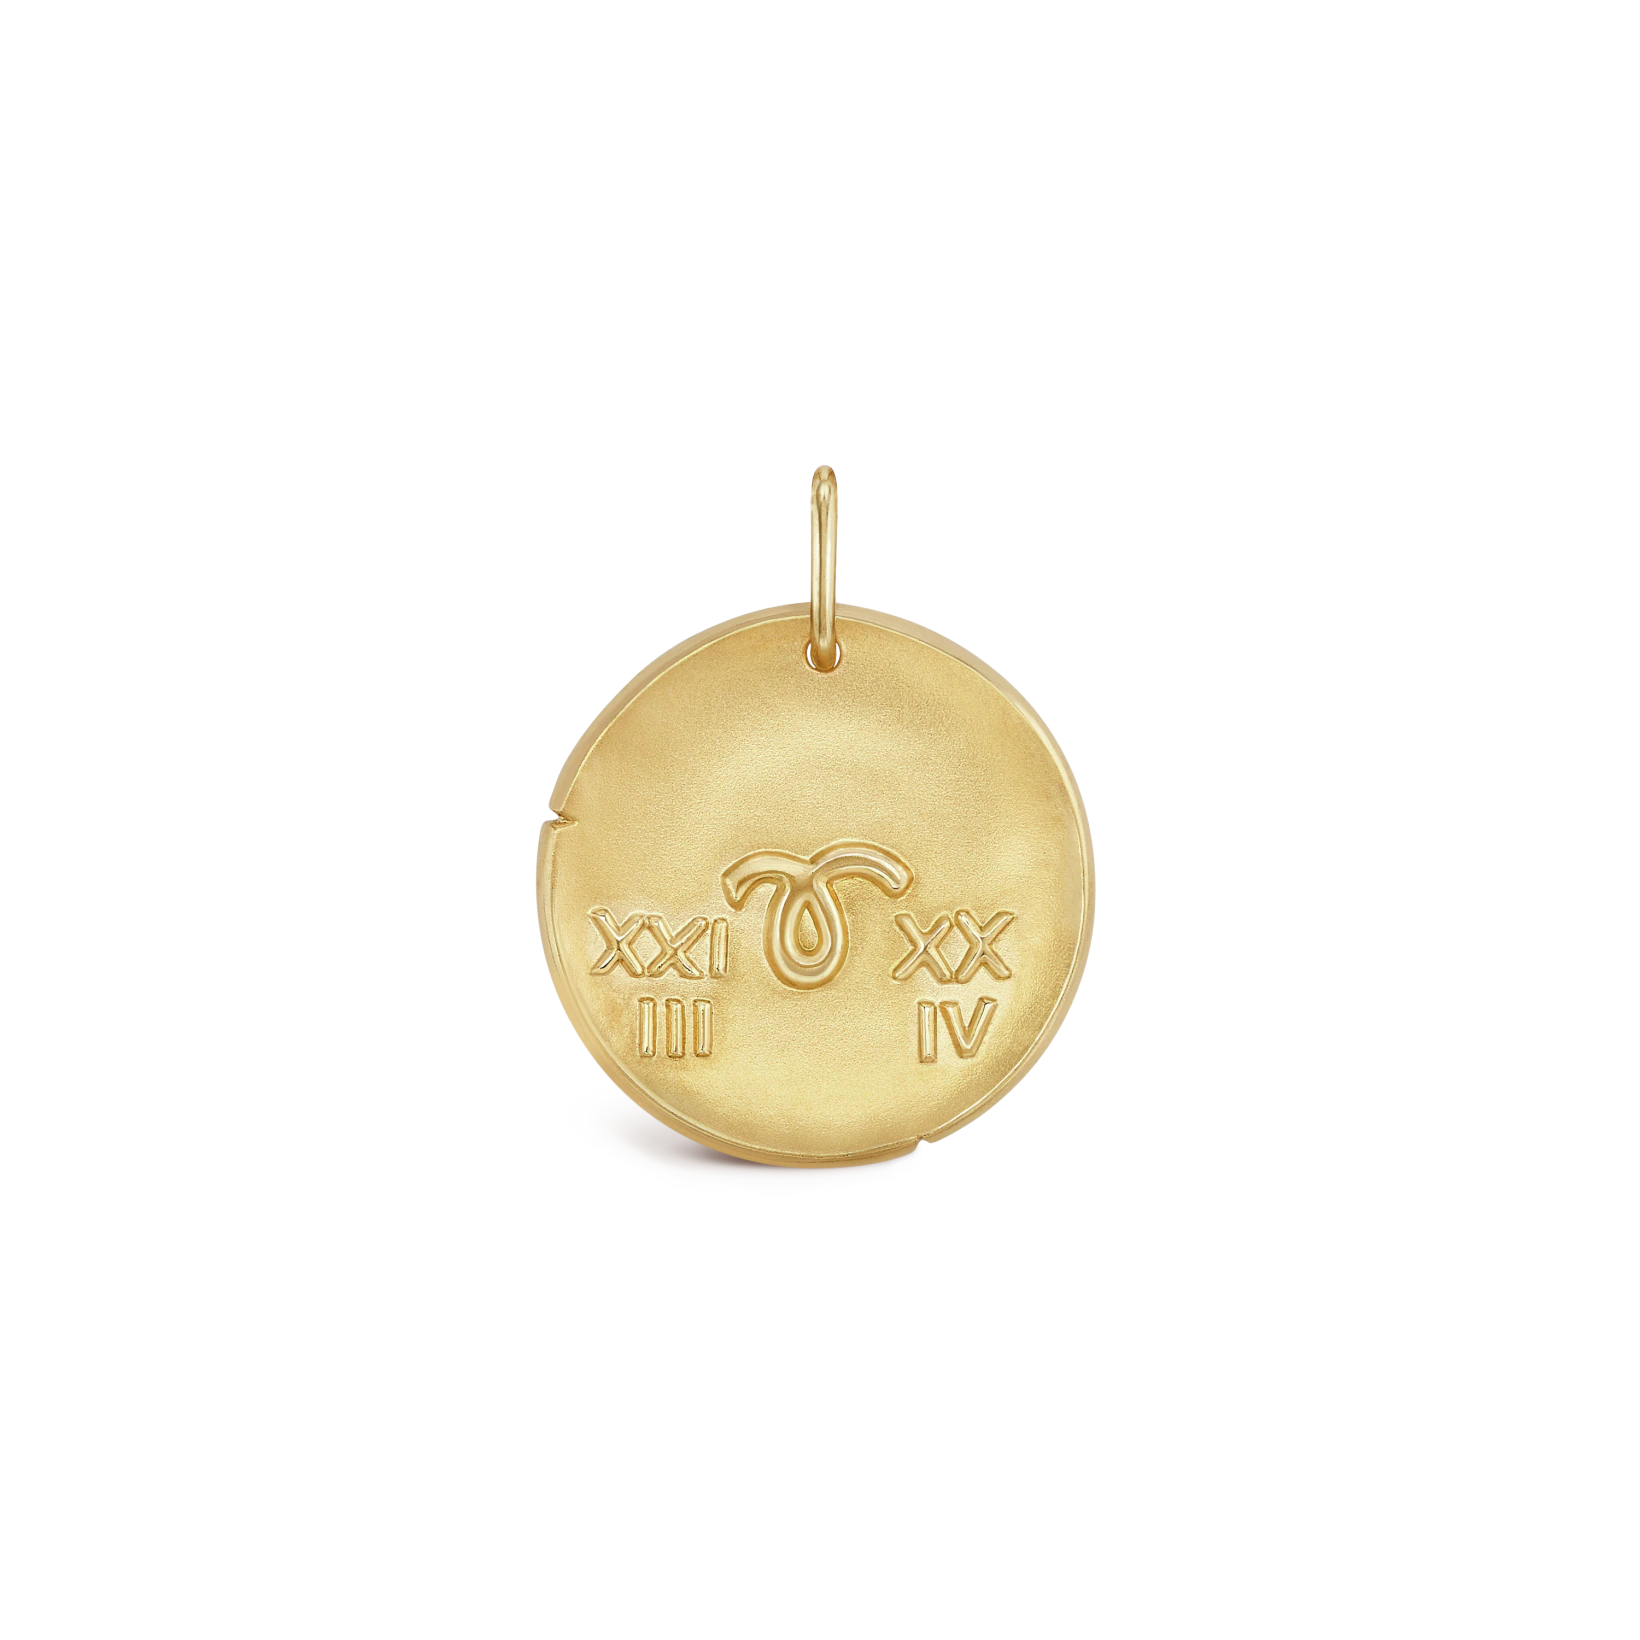 Zodiaque-medal-Arietis-Aries-3.webp